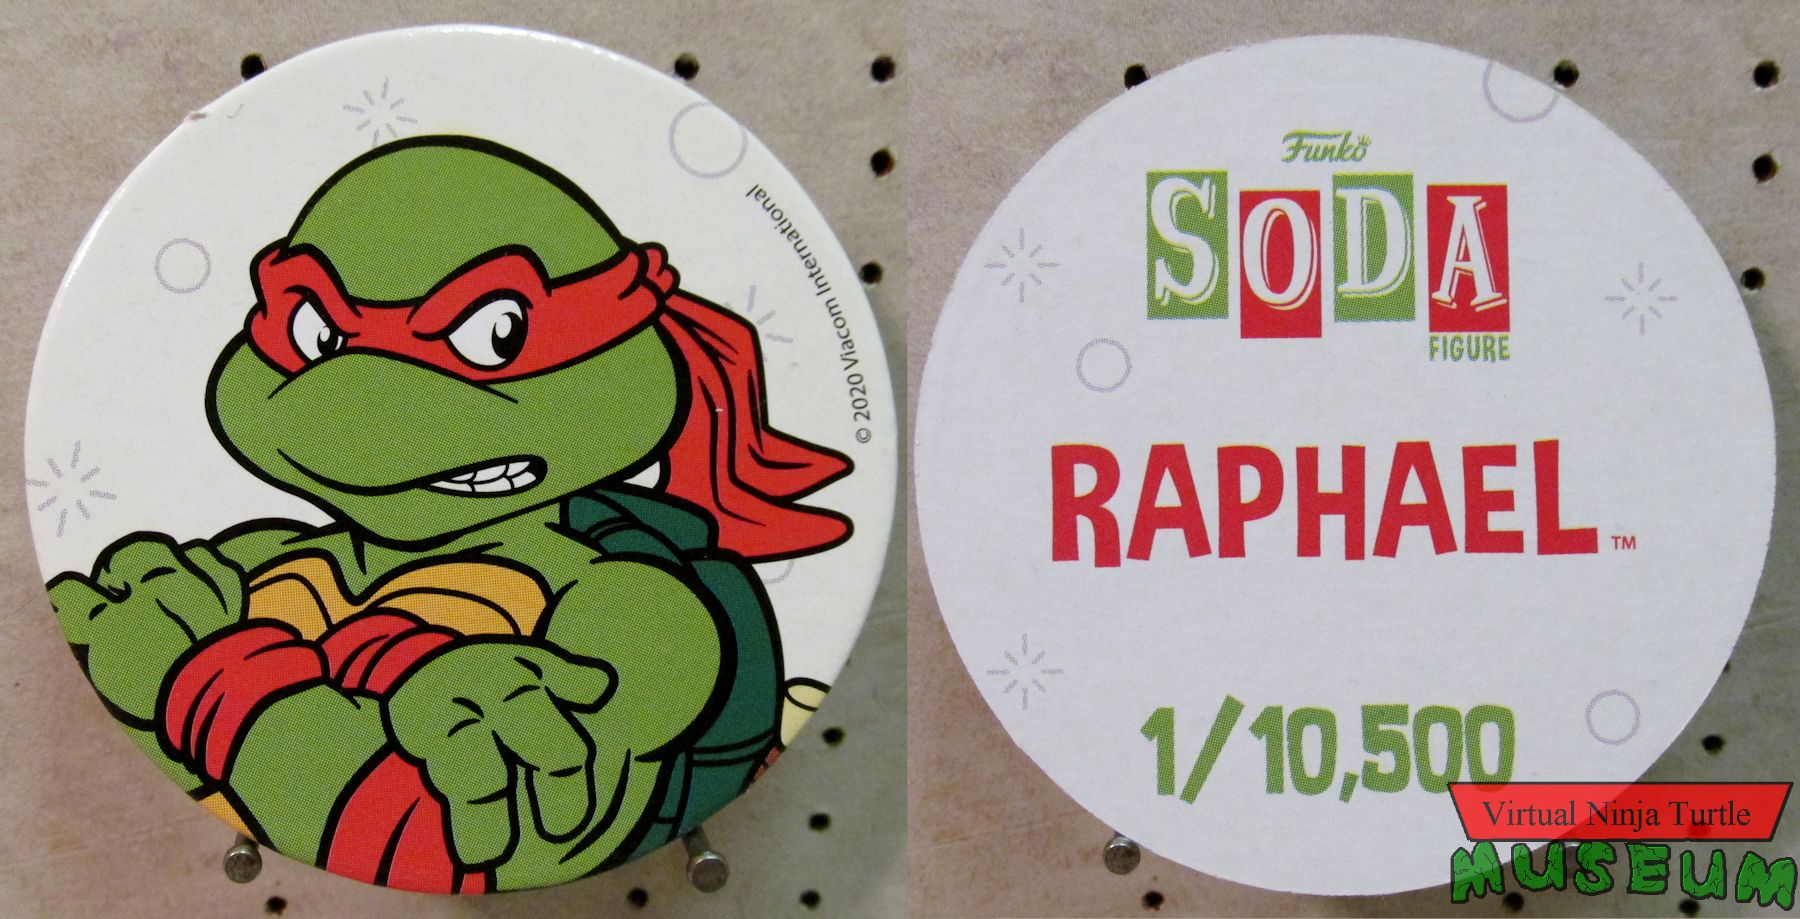 Raphael's accessory POG